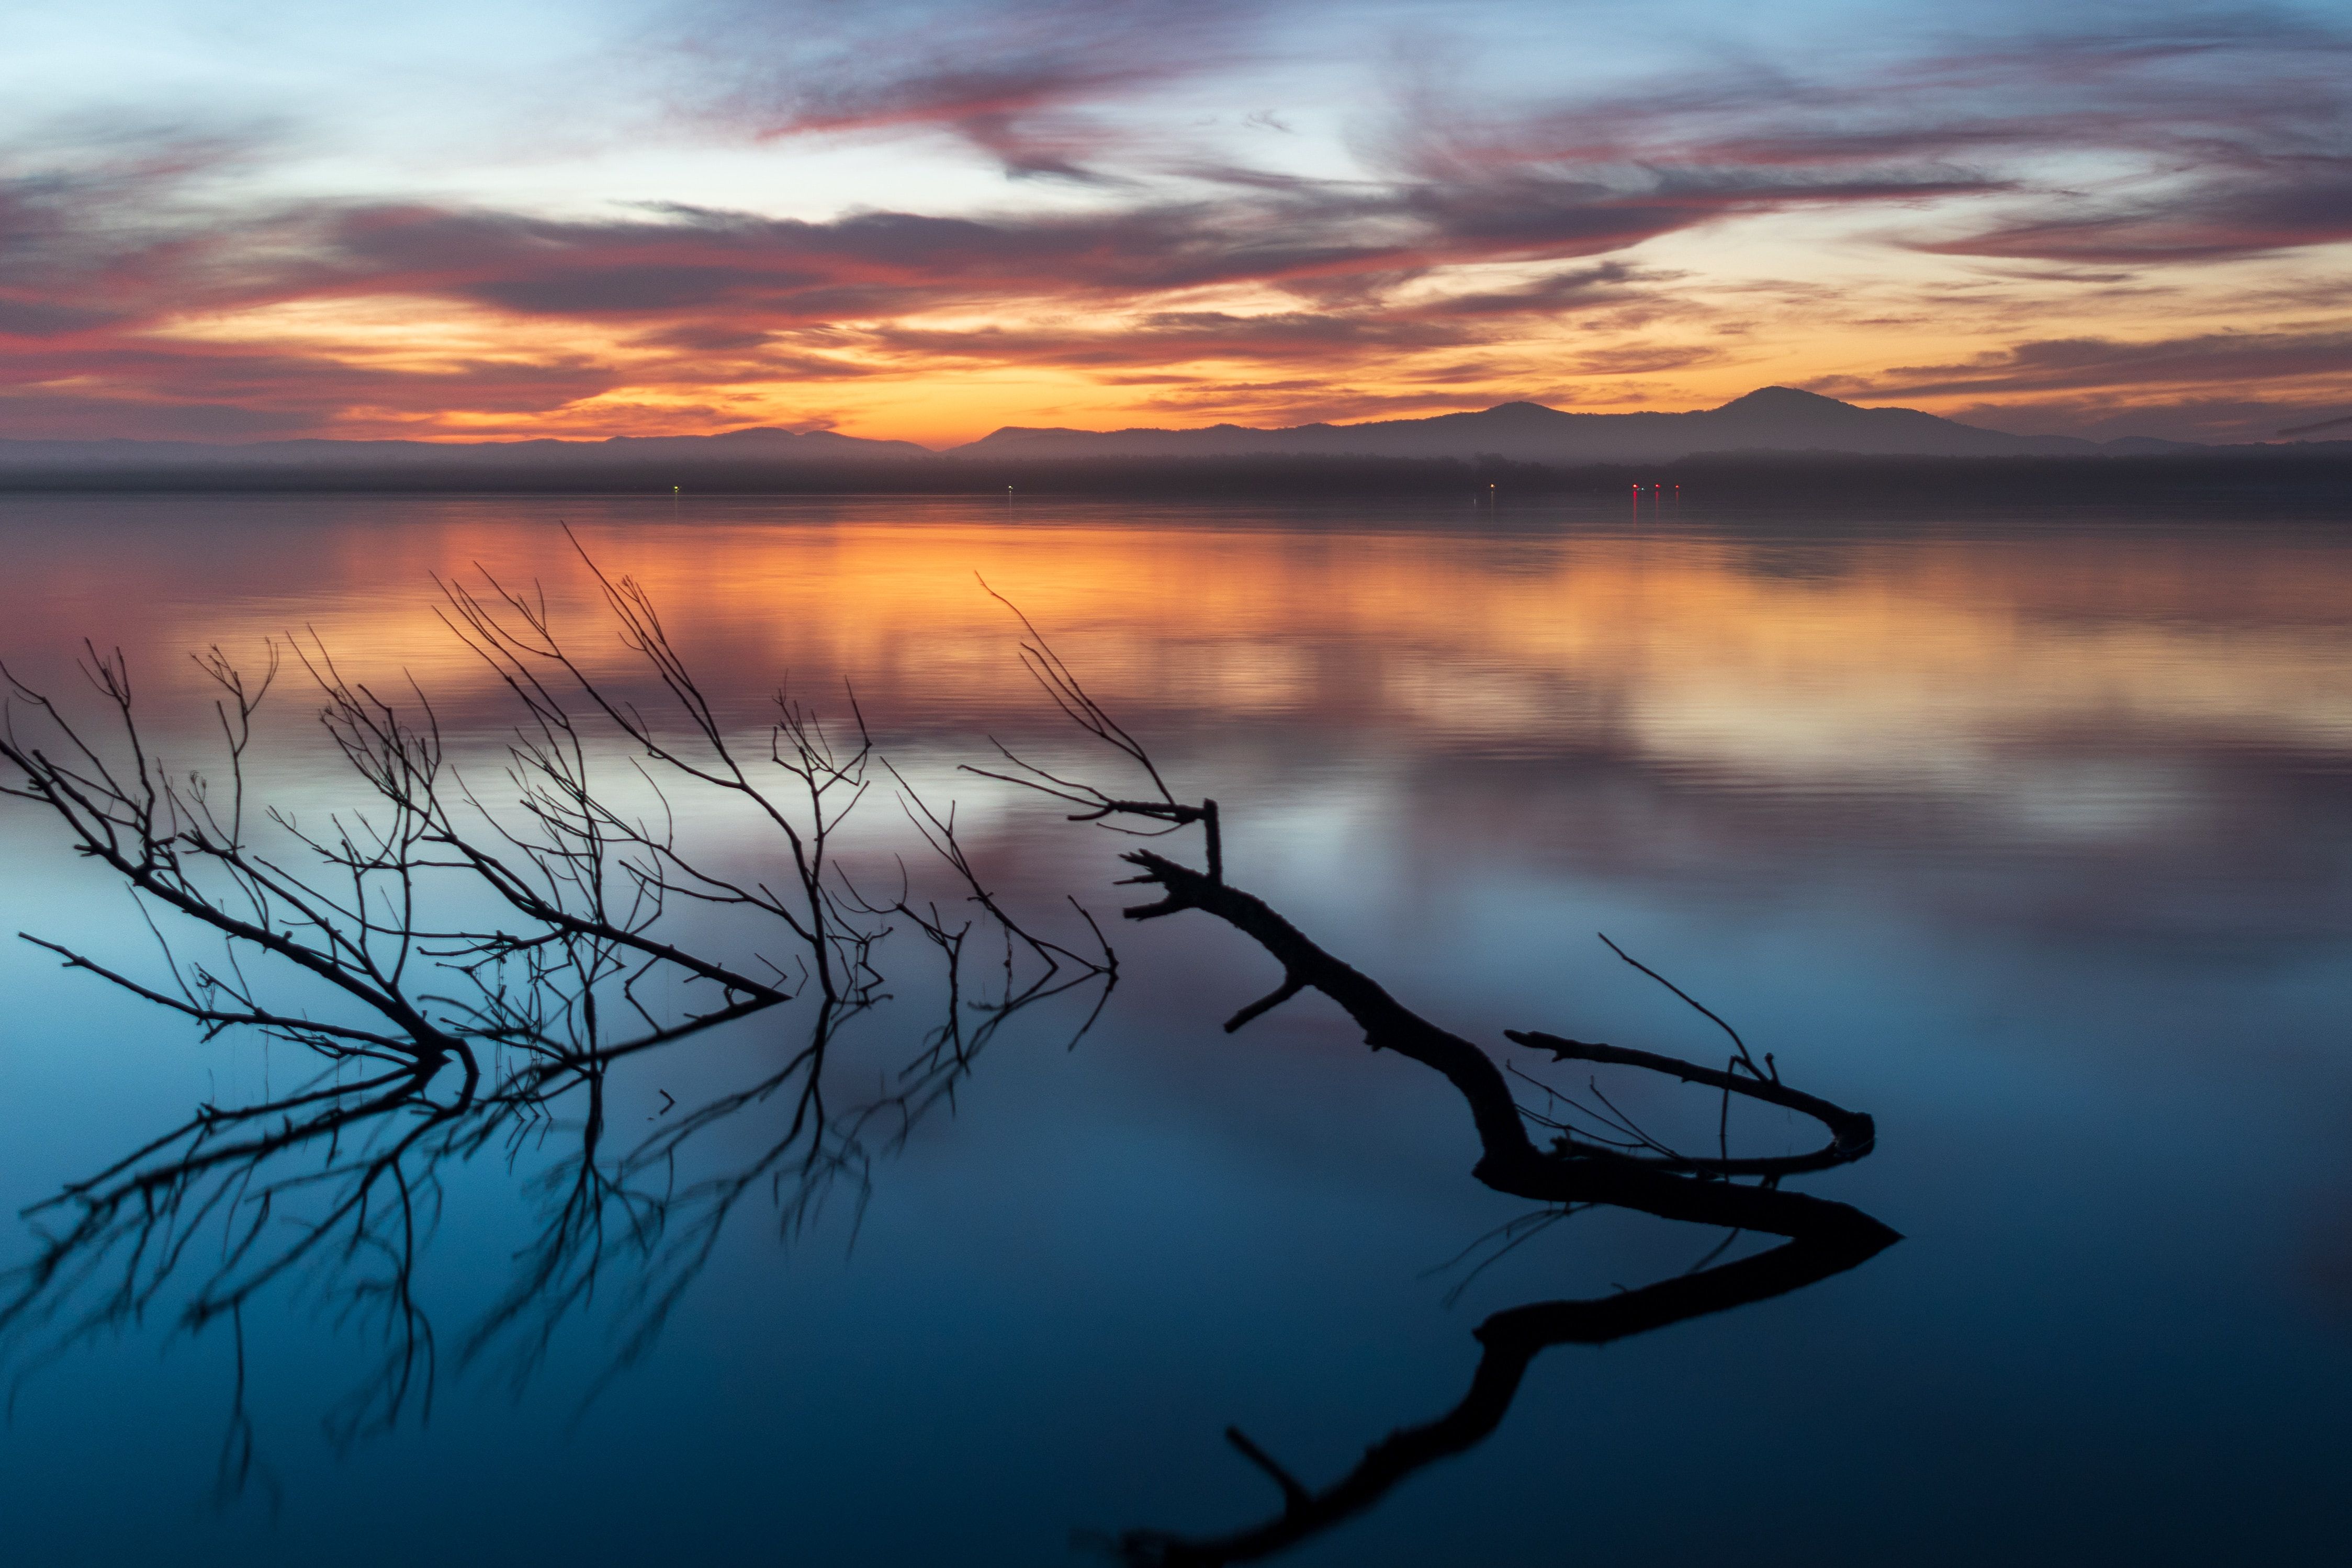 Sunset over Myall Lake, NSW, Australia Photo credit to Neil Deuis